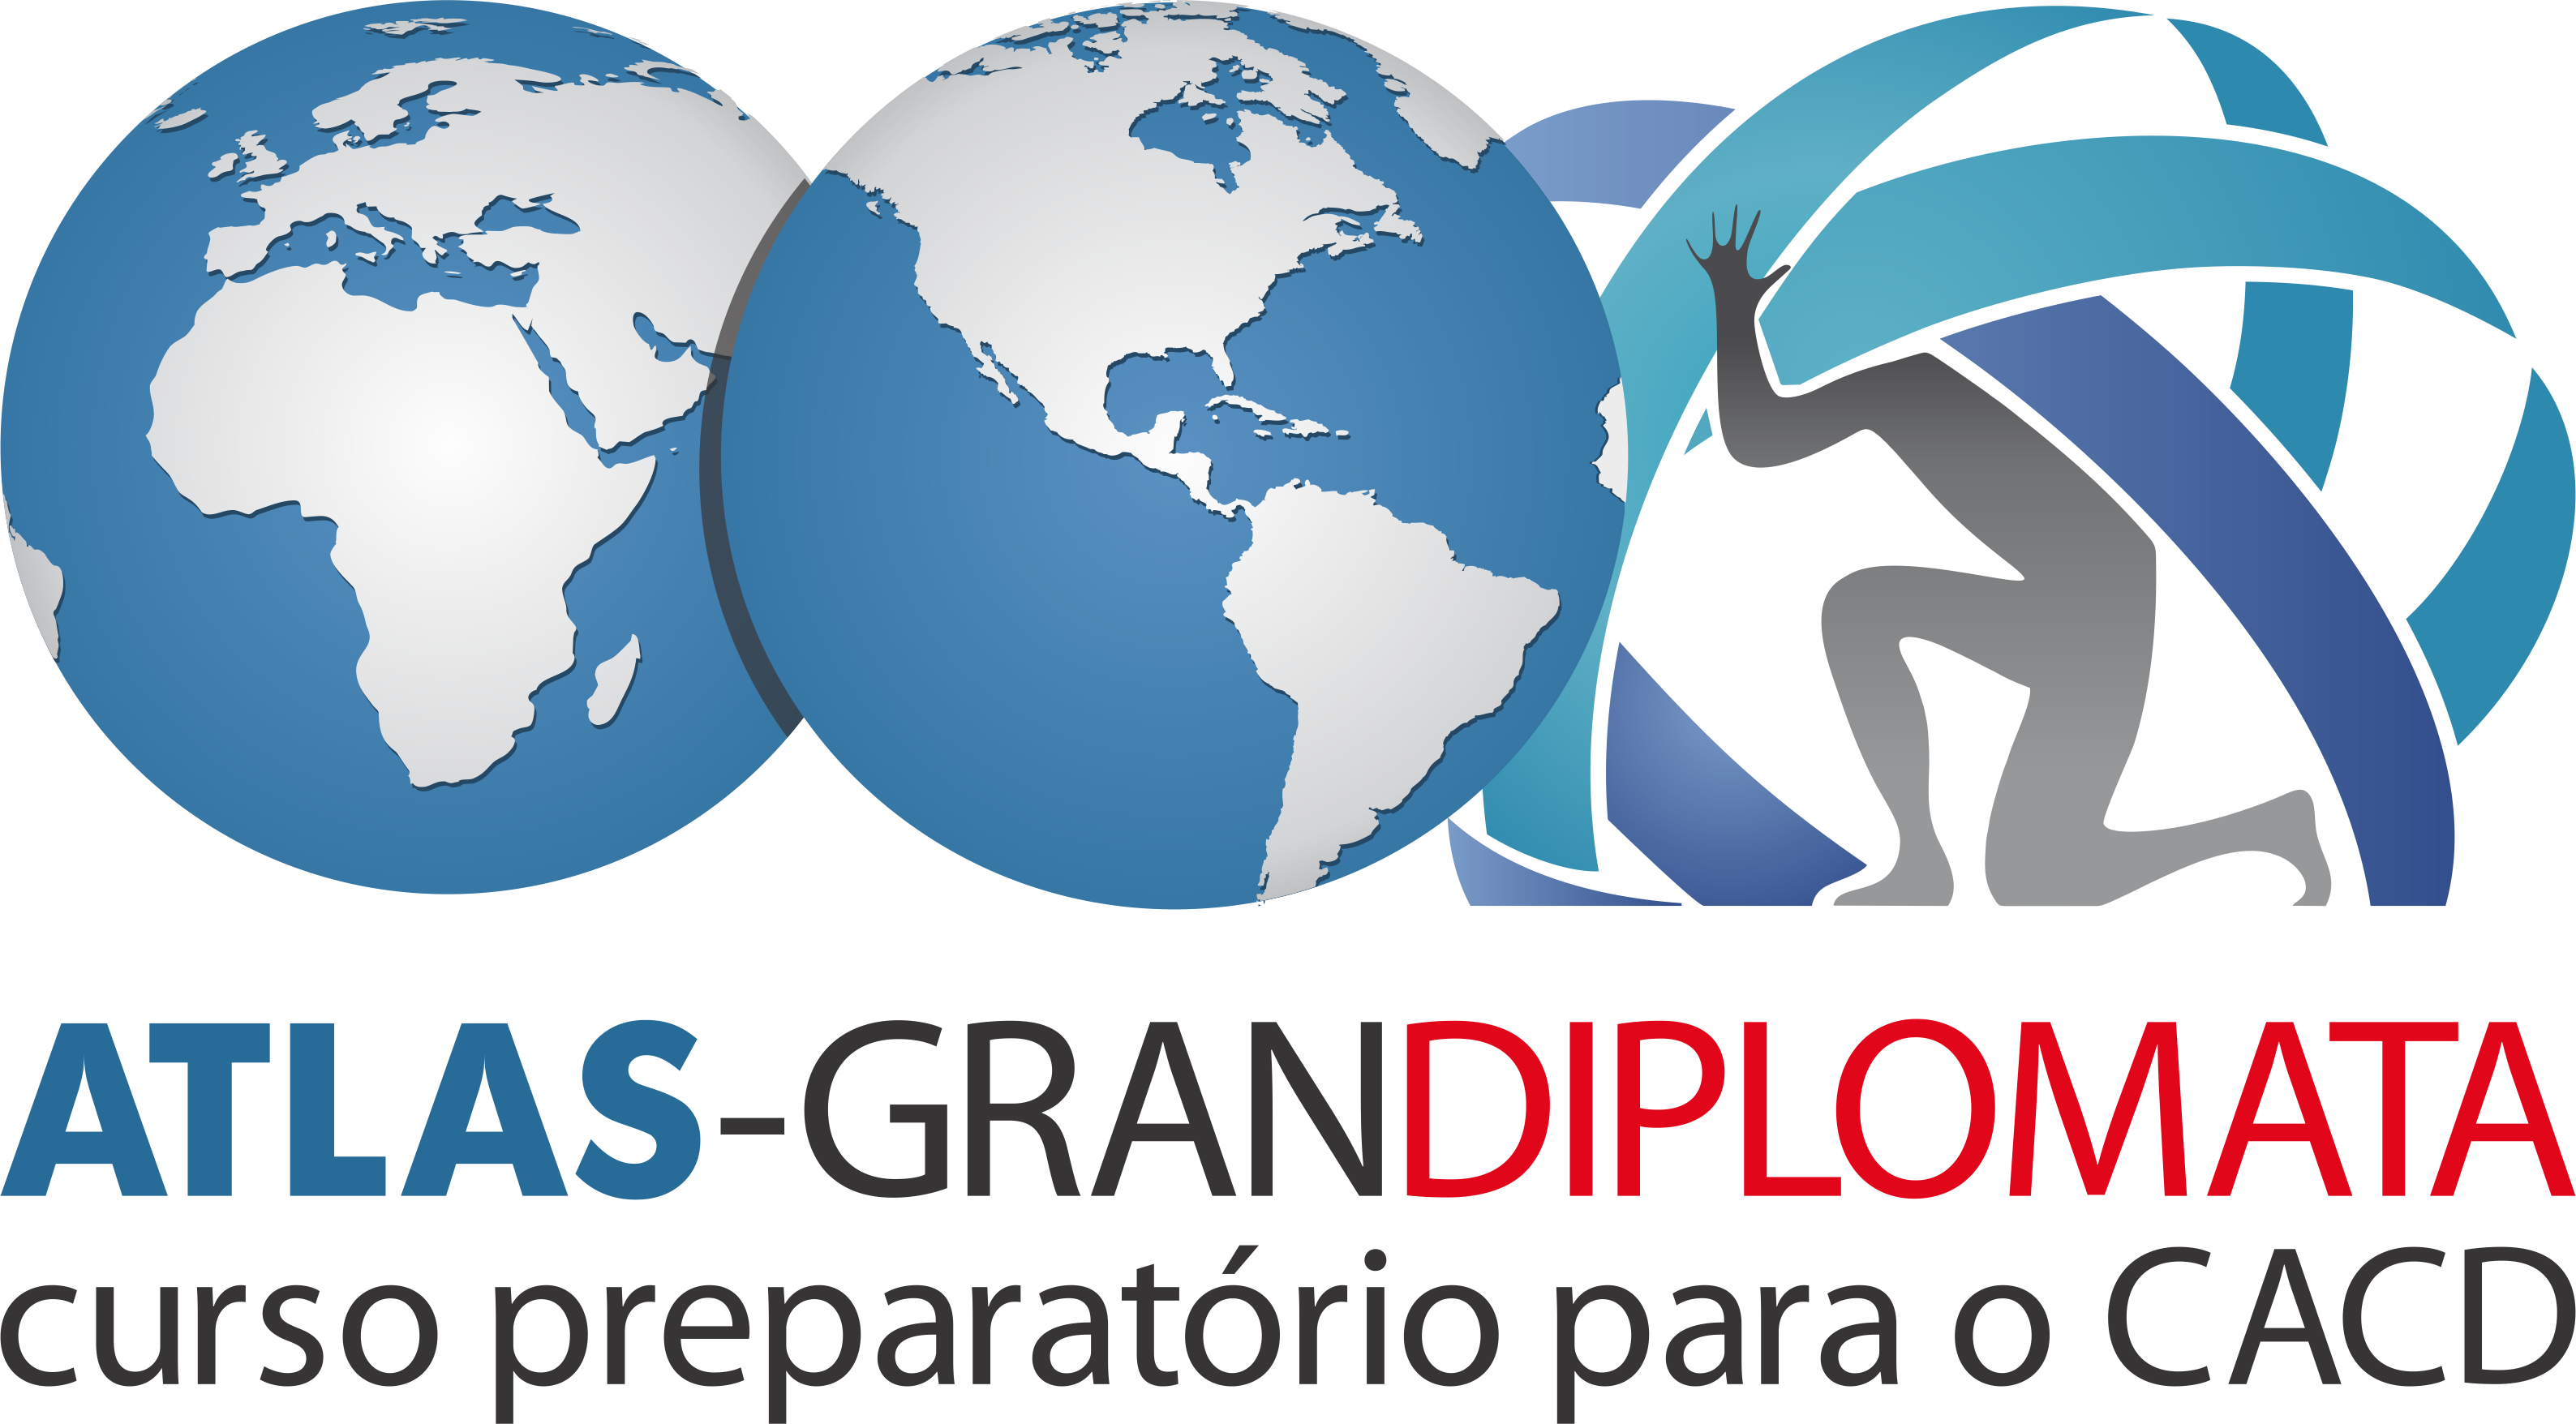 Atlas-GranDiplomata